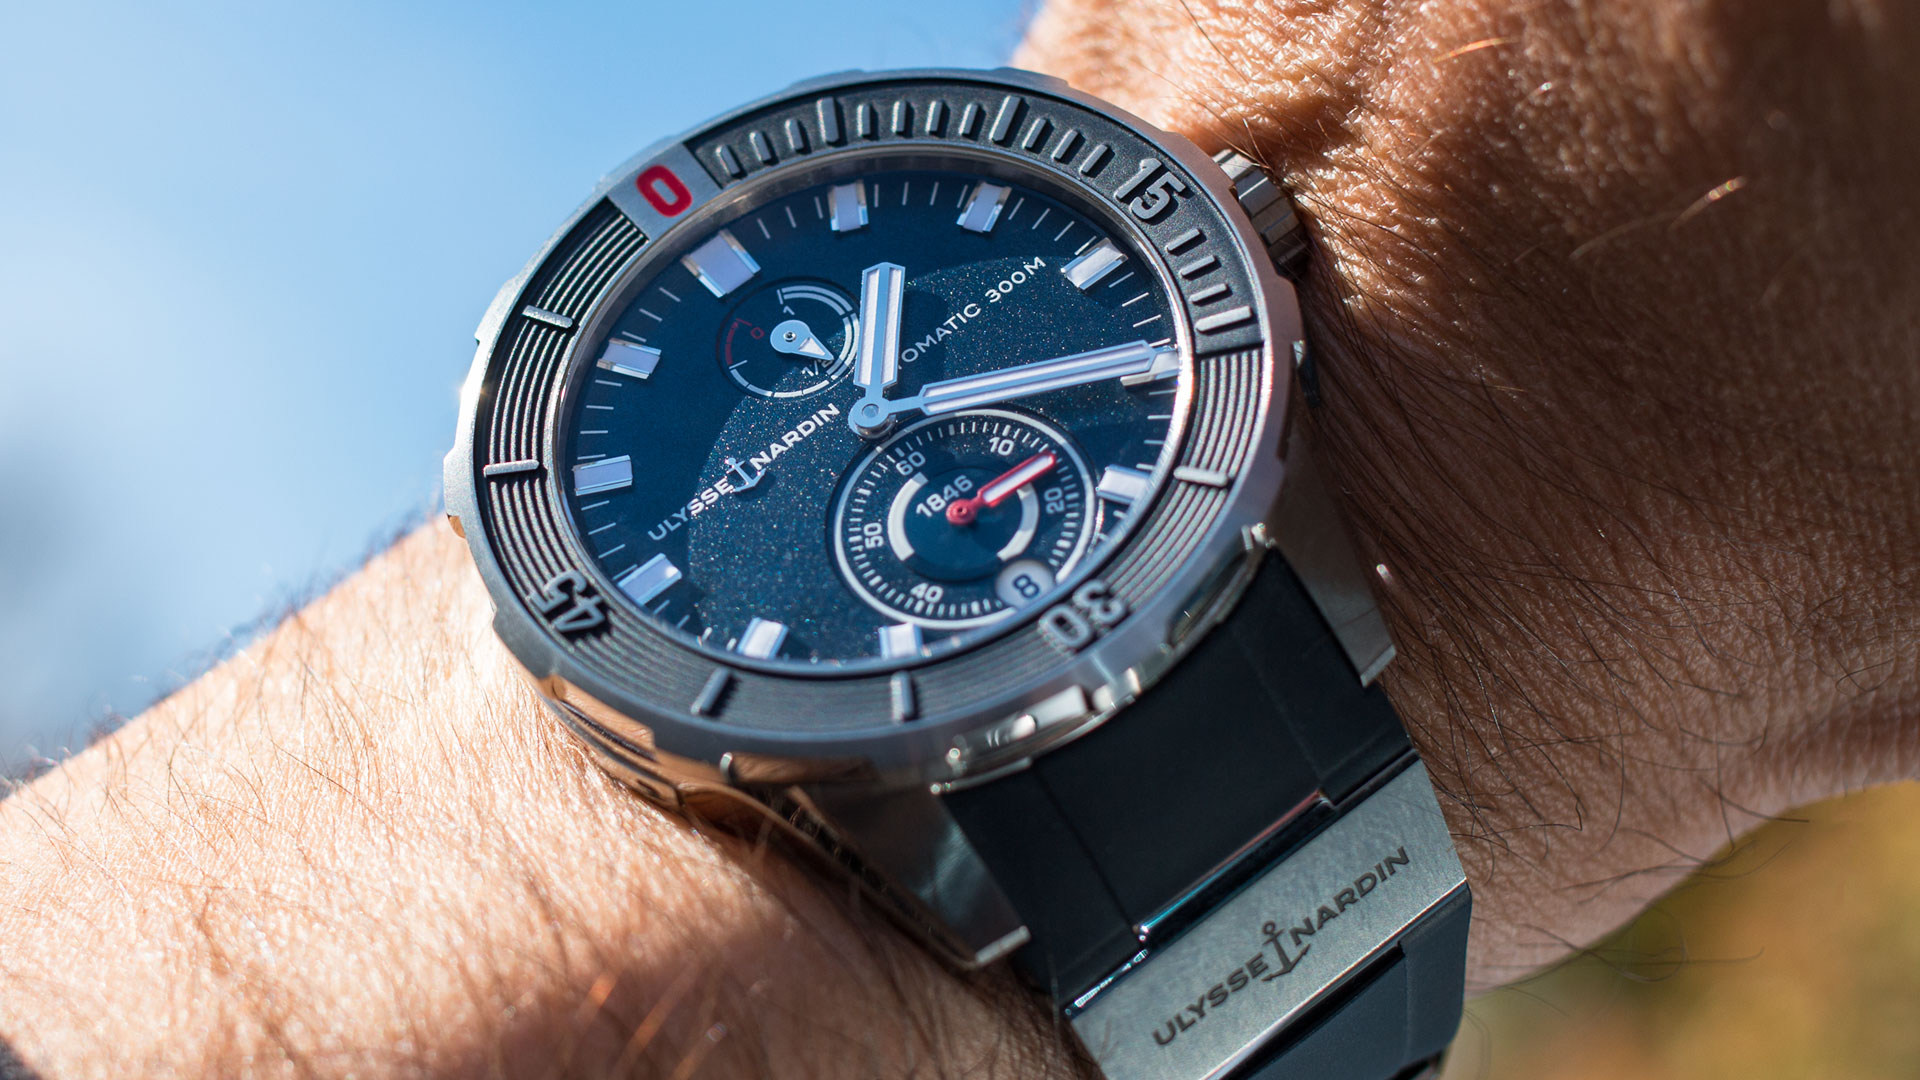 Ulysse Nardin Diver Chronometer Watch Review